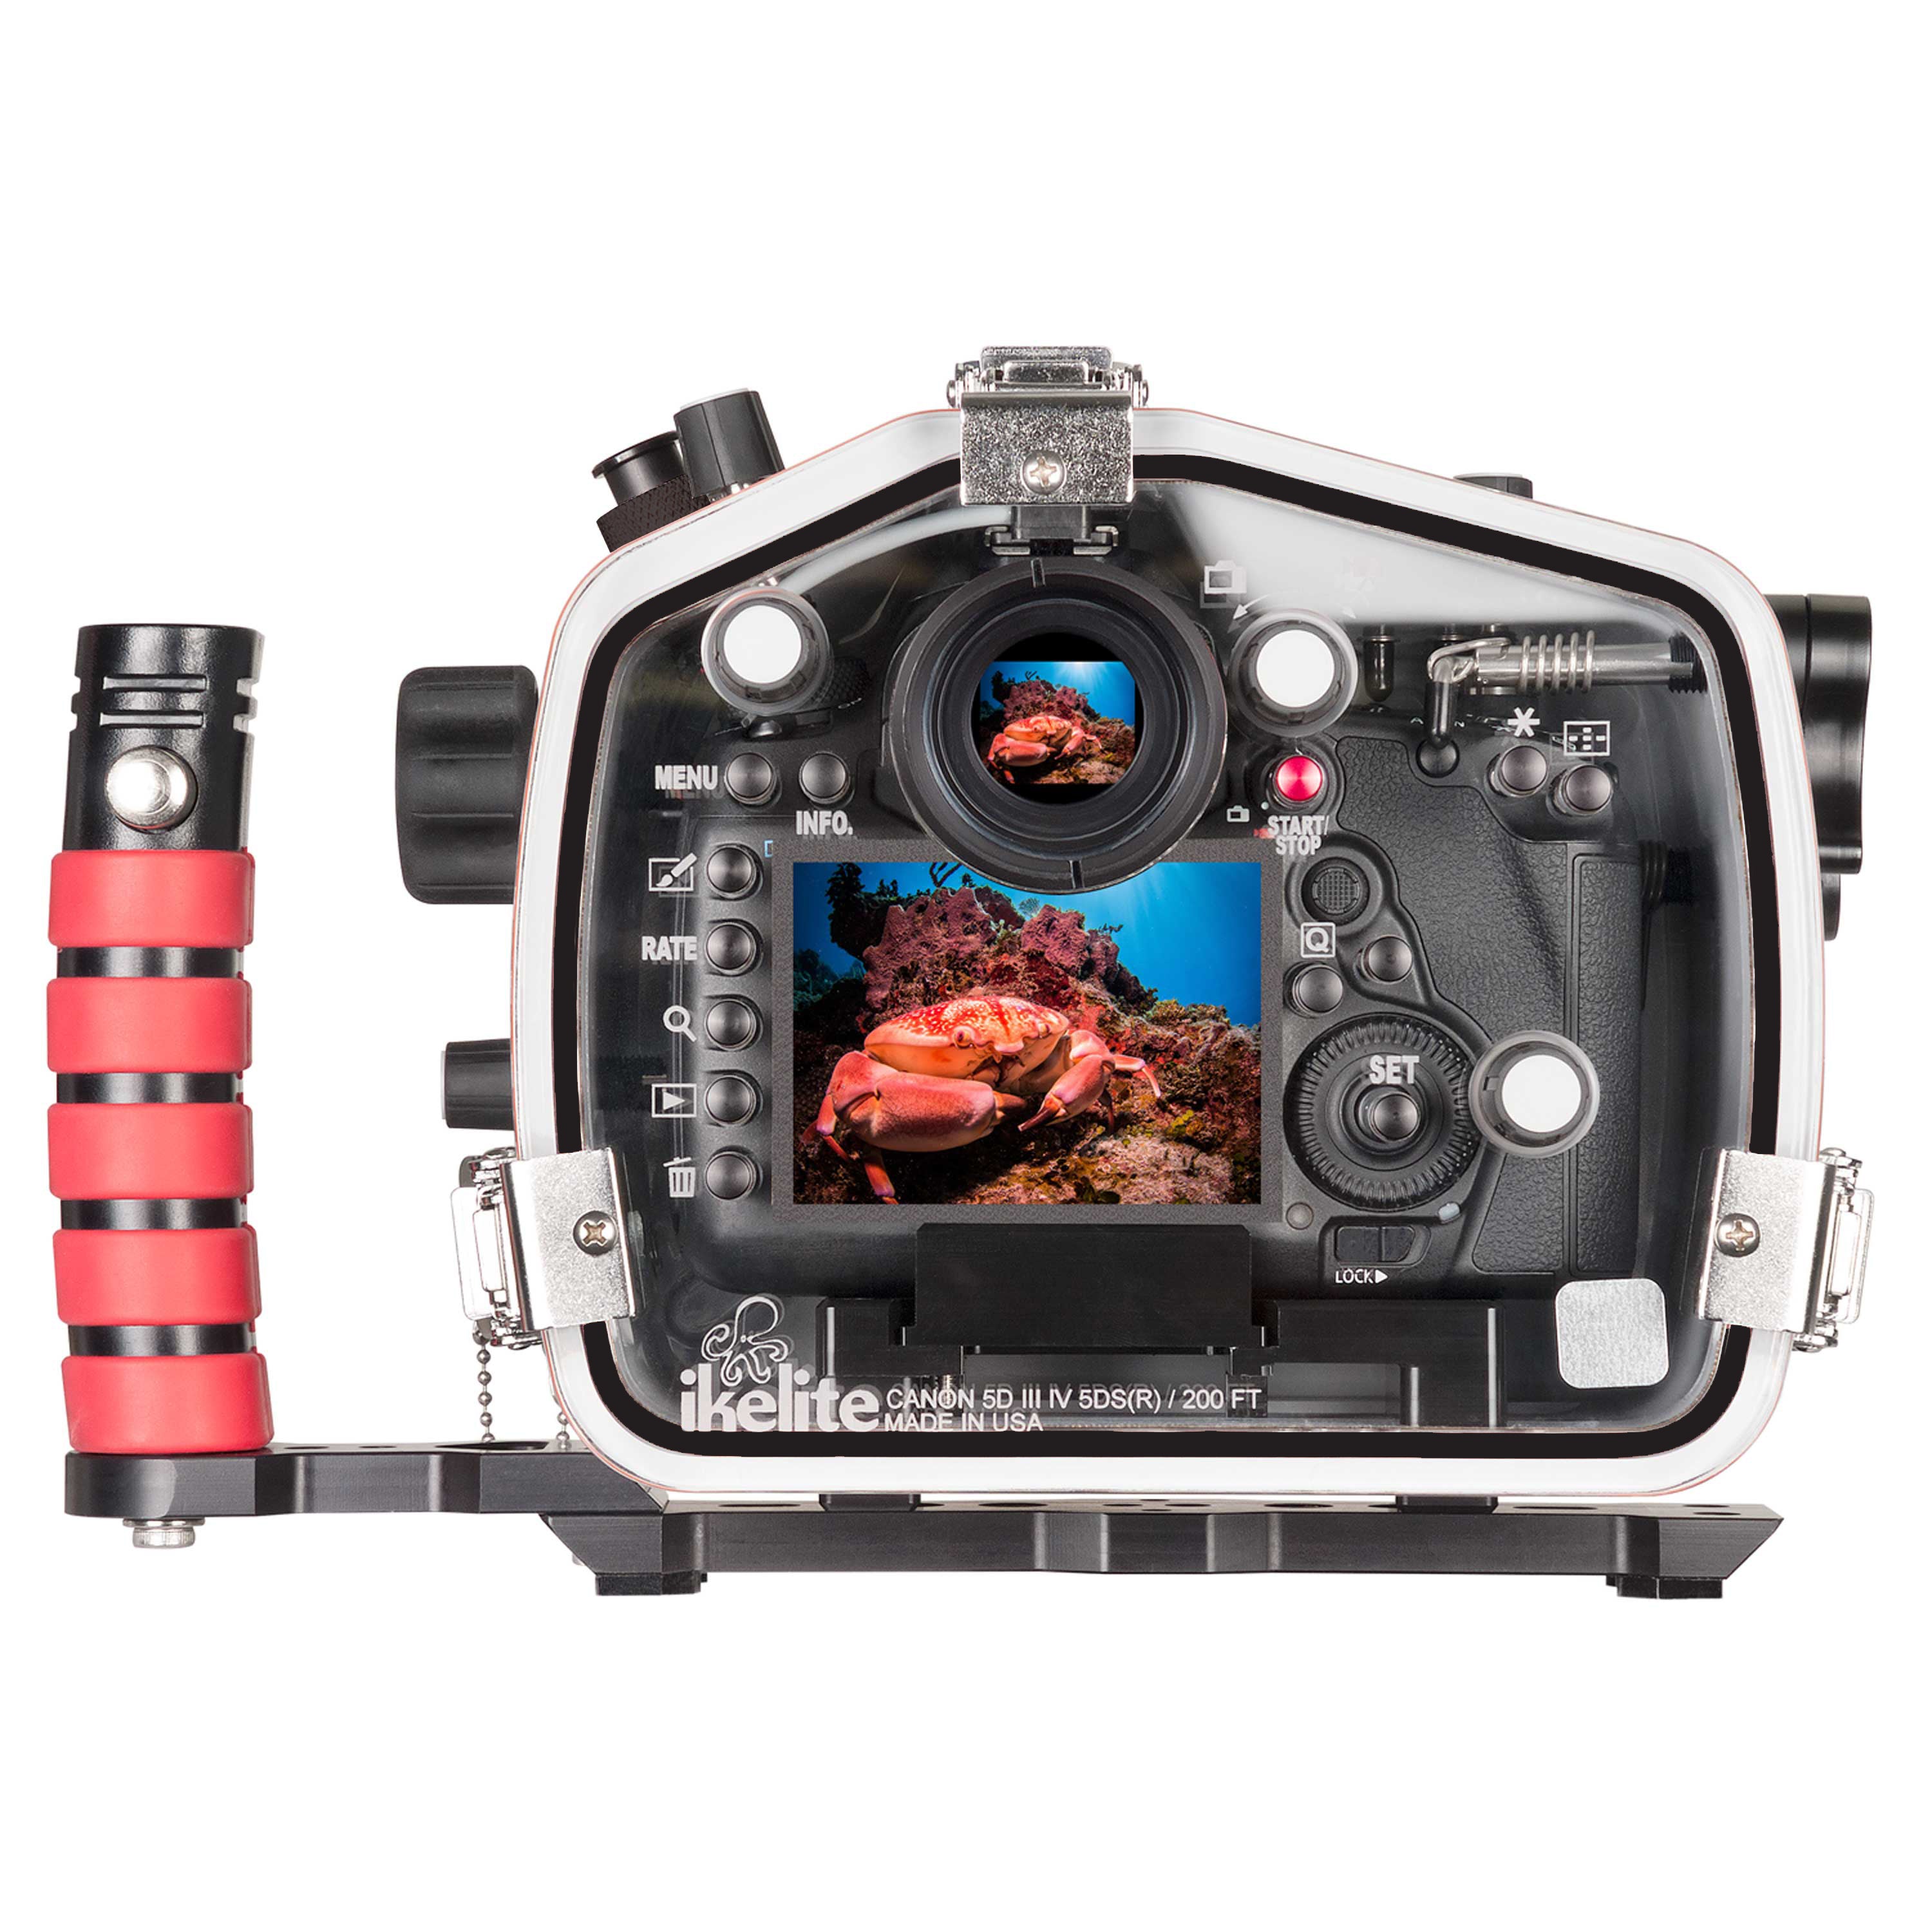 Restringido Vergonzoso Seguro 200DL Underwater Housing for Canon EOS 5D Mark III, 5D Mark IV, 5DS, 5